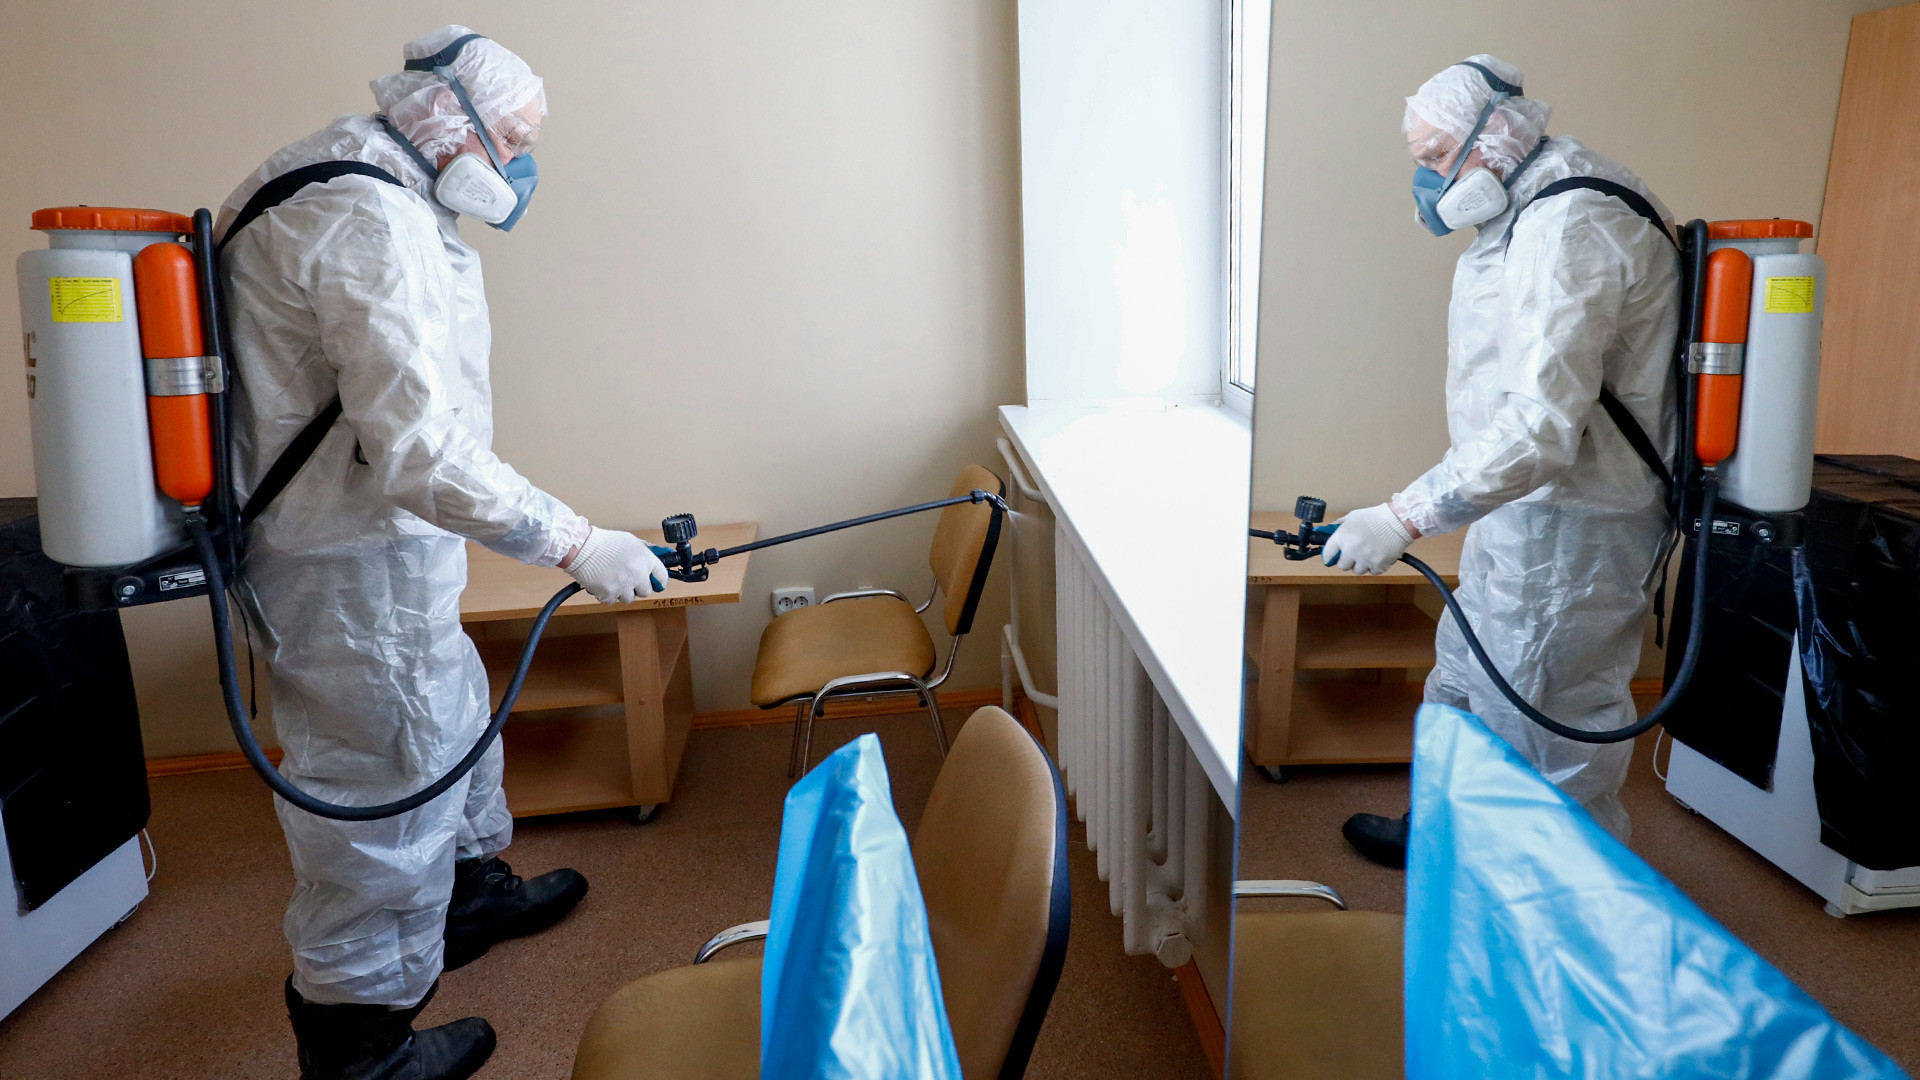 Sanitarium disinfection after COVID-2019 quarantine in the Tyumen region, Feb. 21, 2020.